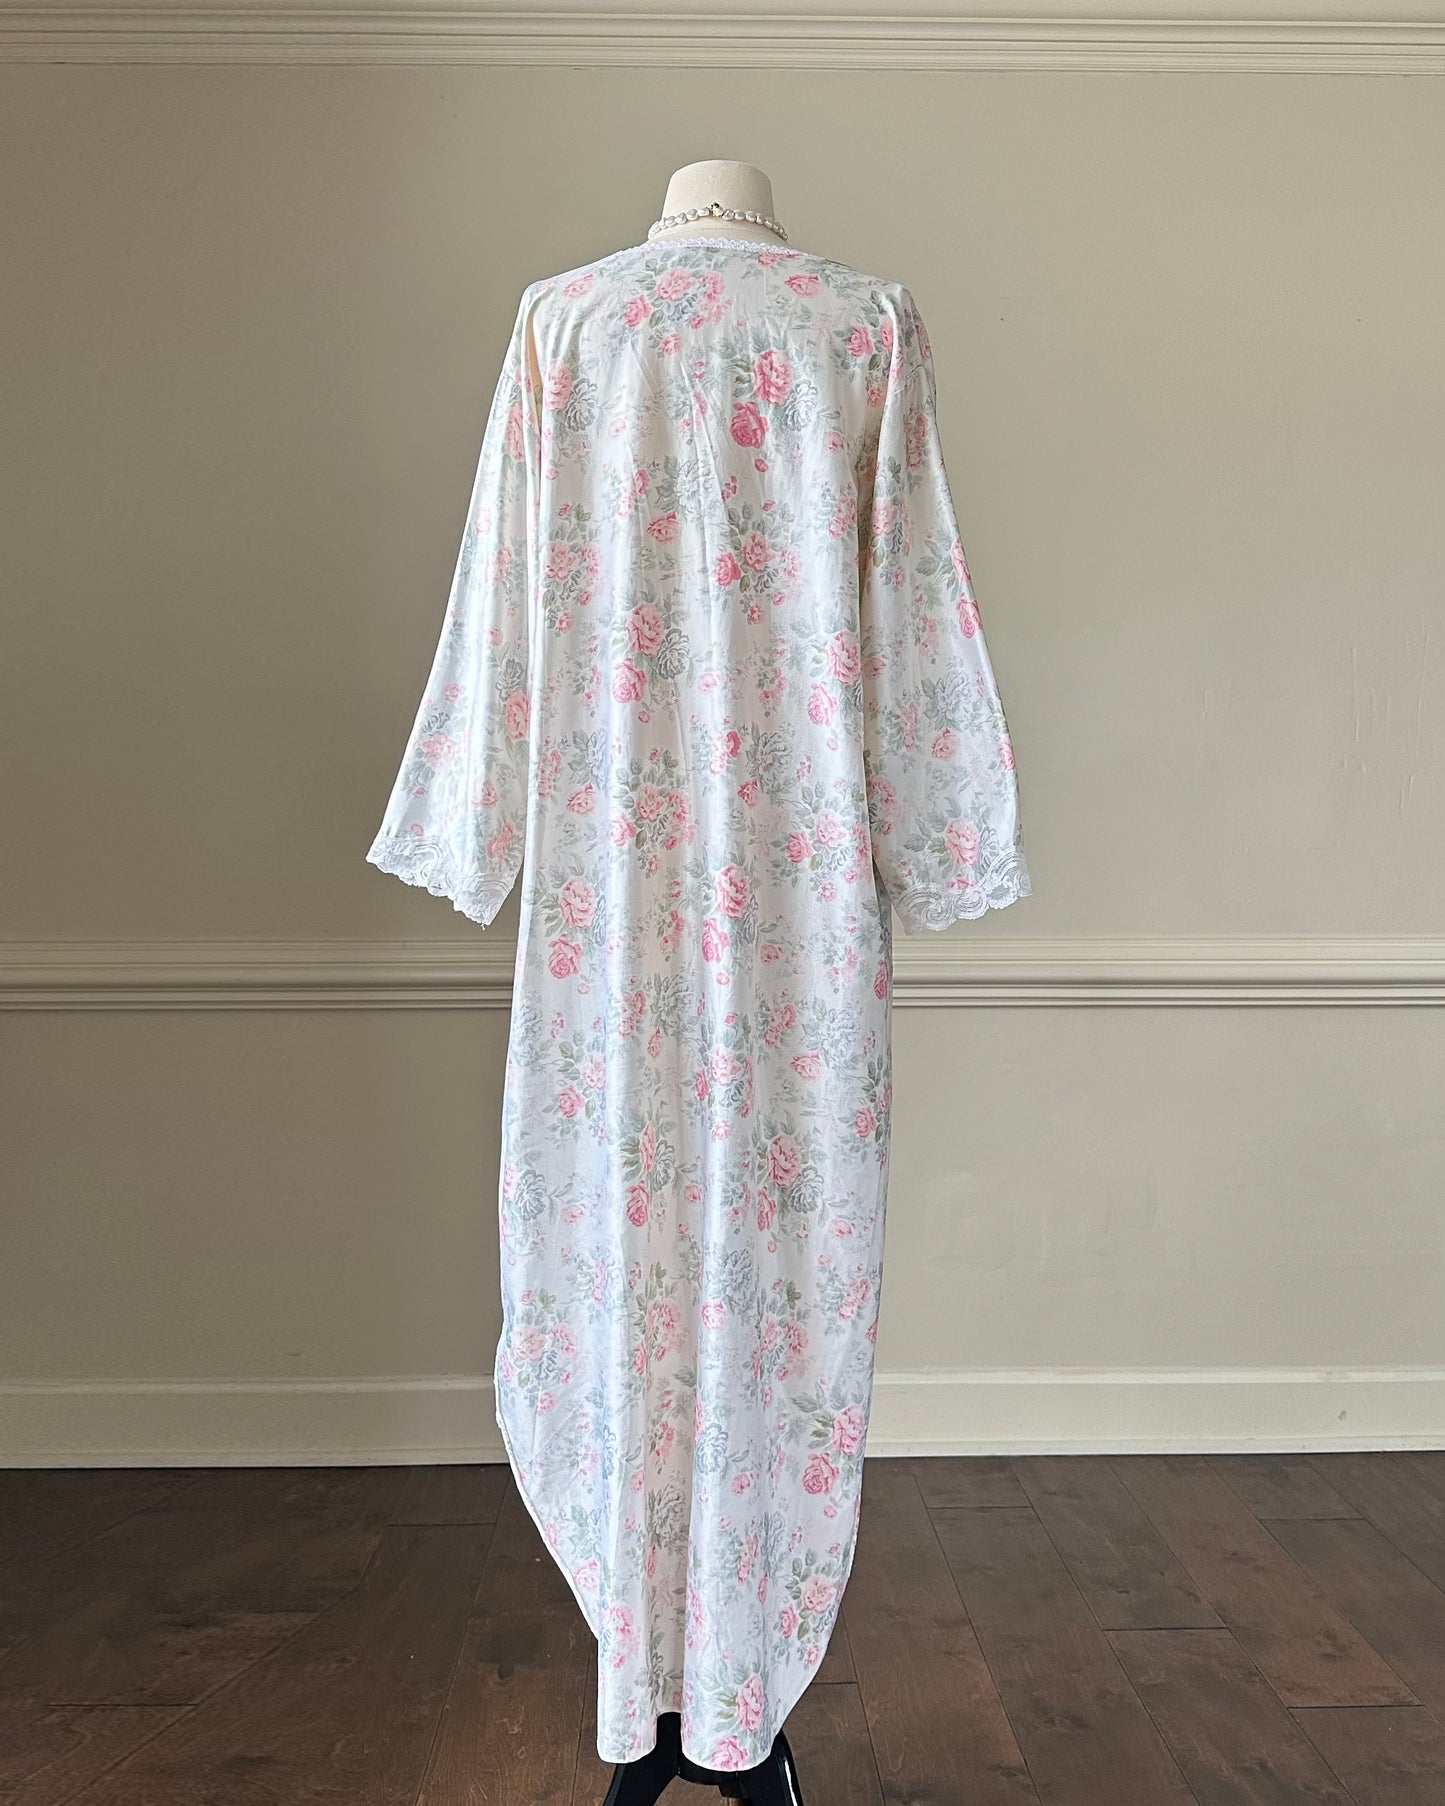 Vintage Barbizon Maxi Dress featuring Rosette Prints on Satin Fabric